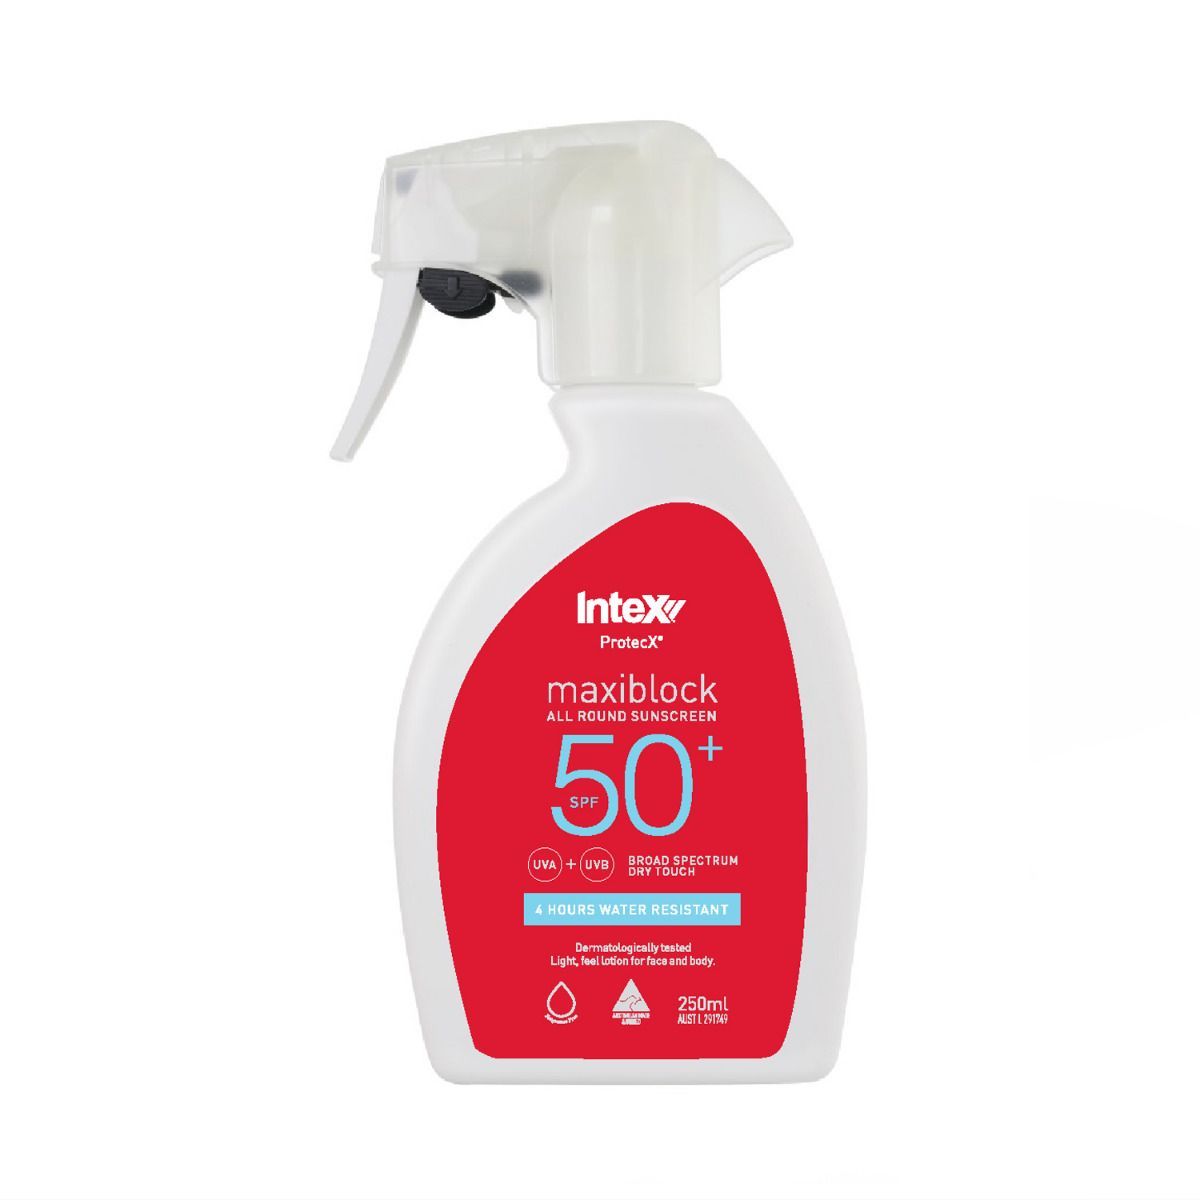 Intex ProtecX Sunscreen Spray Bottle 50 Plus - 250ml
